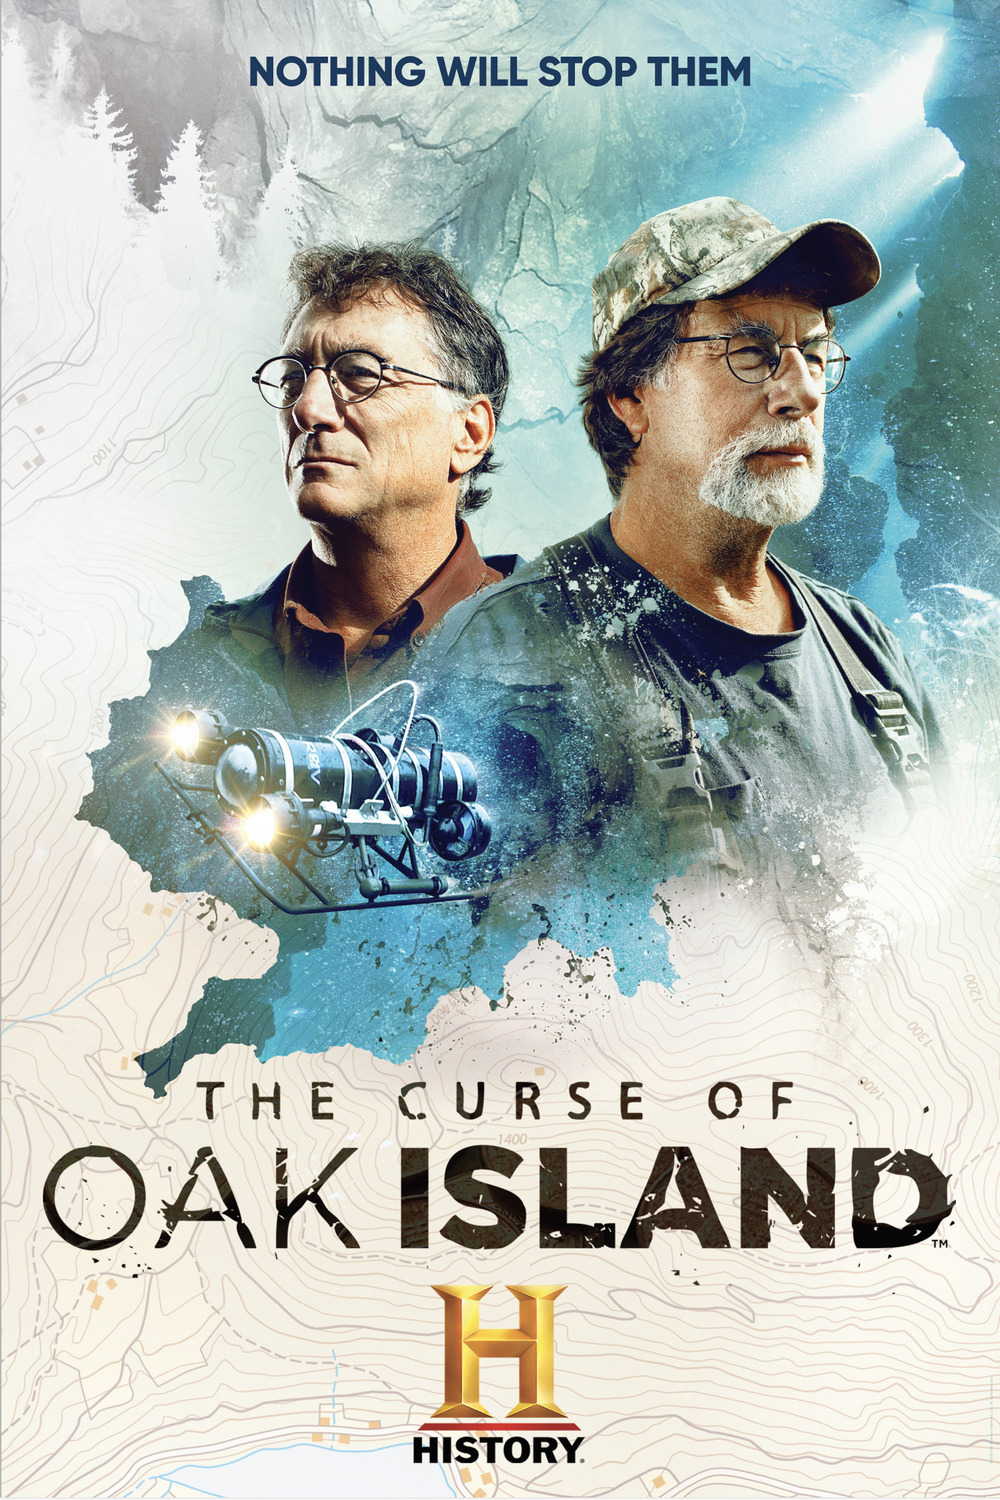 The Curse Of Oak Island S11E10 [1080p] (x265) F406c8170ba8de5a107ef076aeb766bb